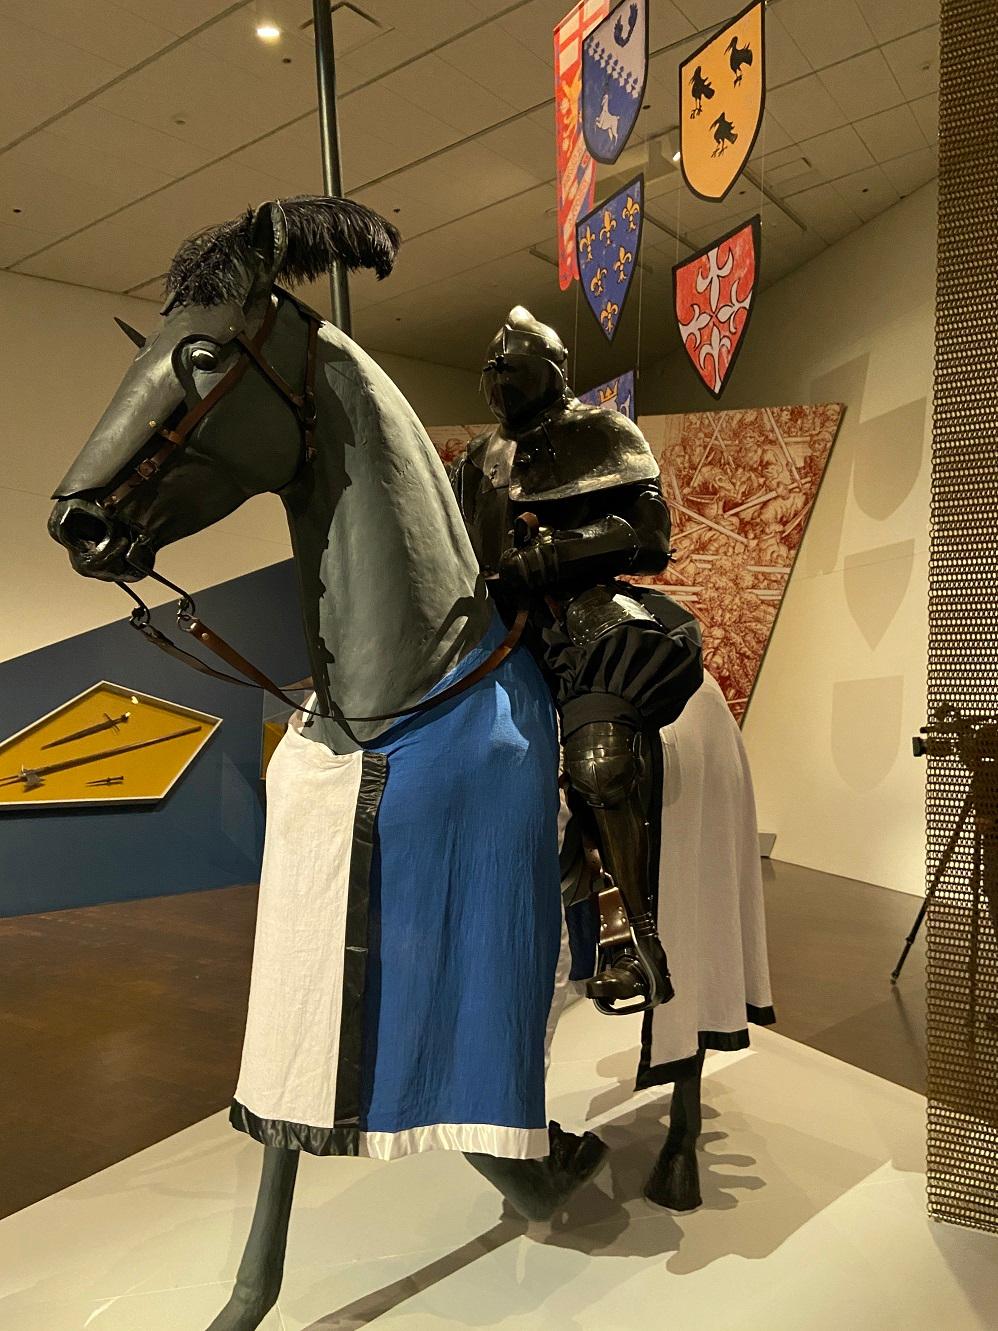 Age of Armor exhibit at Denver Museum of Art. (Denver Art Museum)